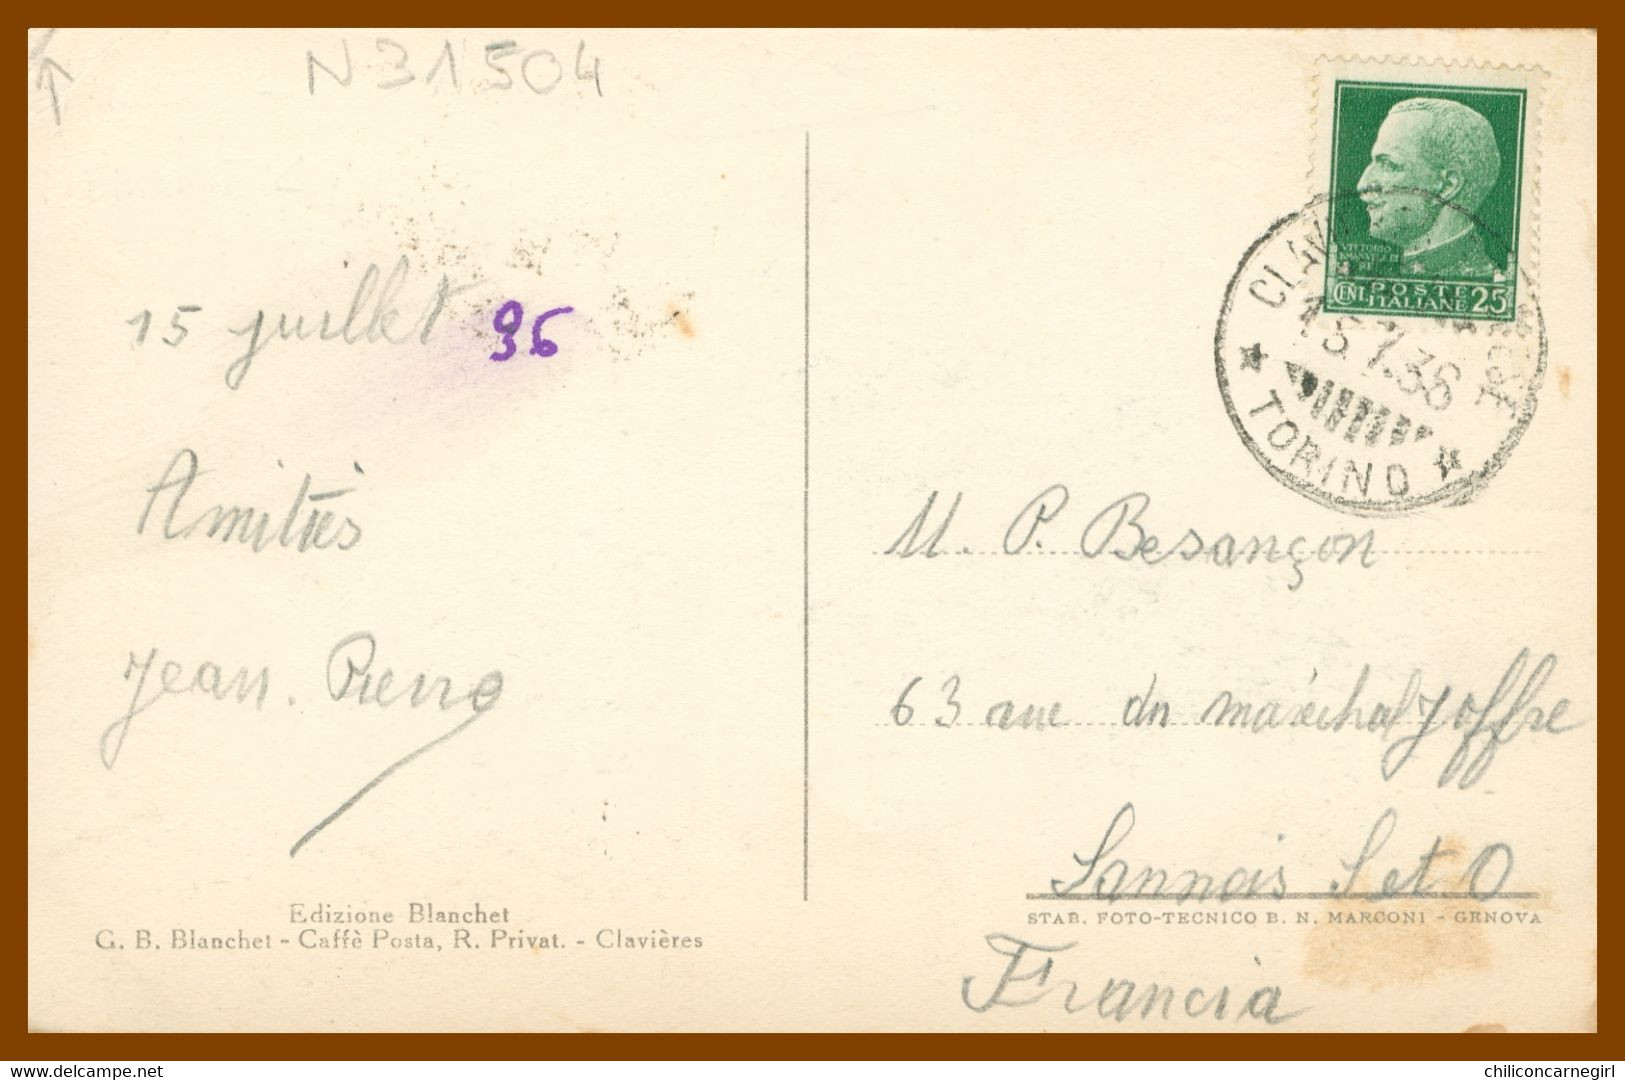 CLAVIERES - Albergo Savoia - Edit. BLANCHET Caffé Posta R. Privat. - Foto MARCONI - 1936 - Bars, Hotels & Restaurants